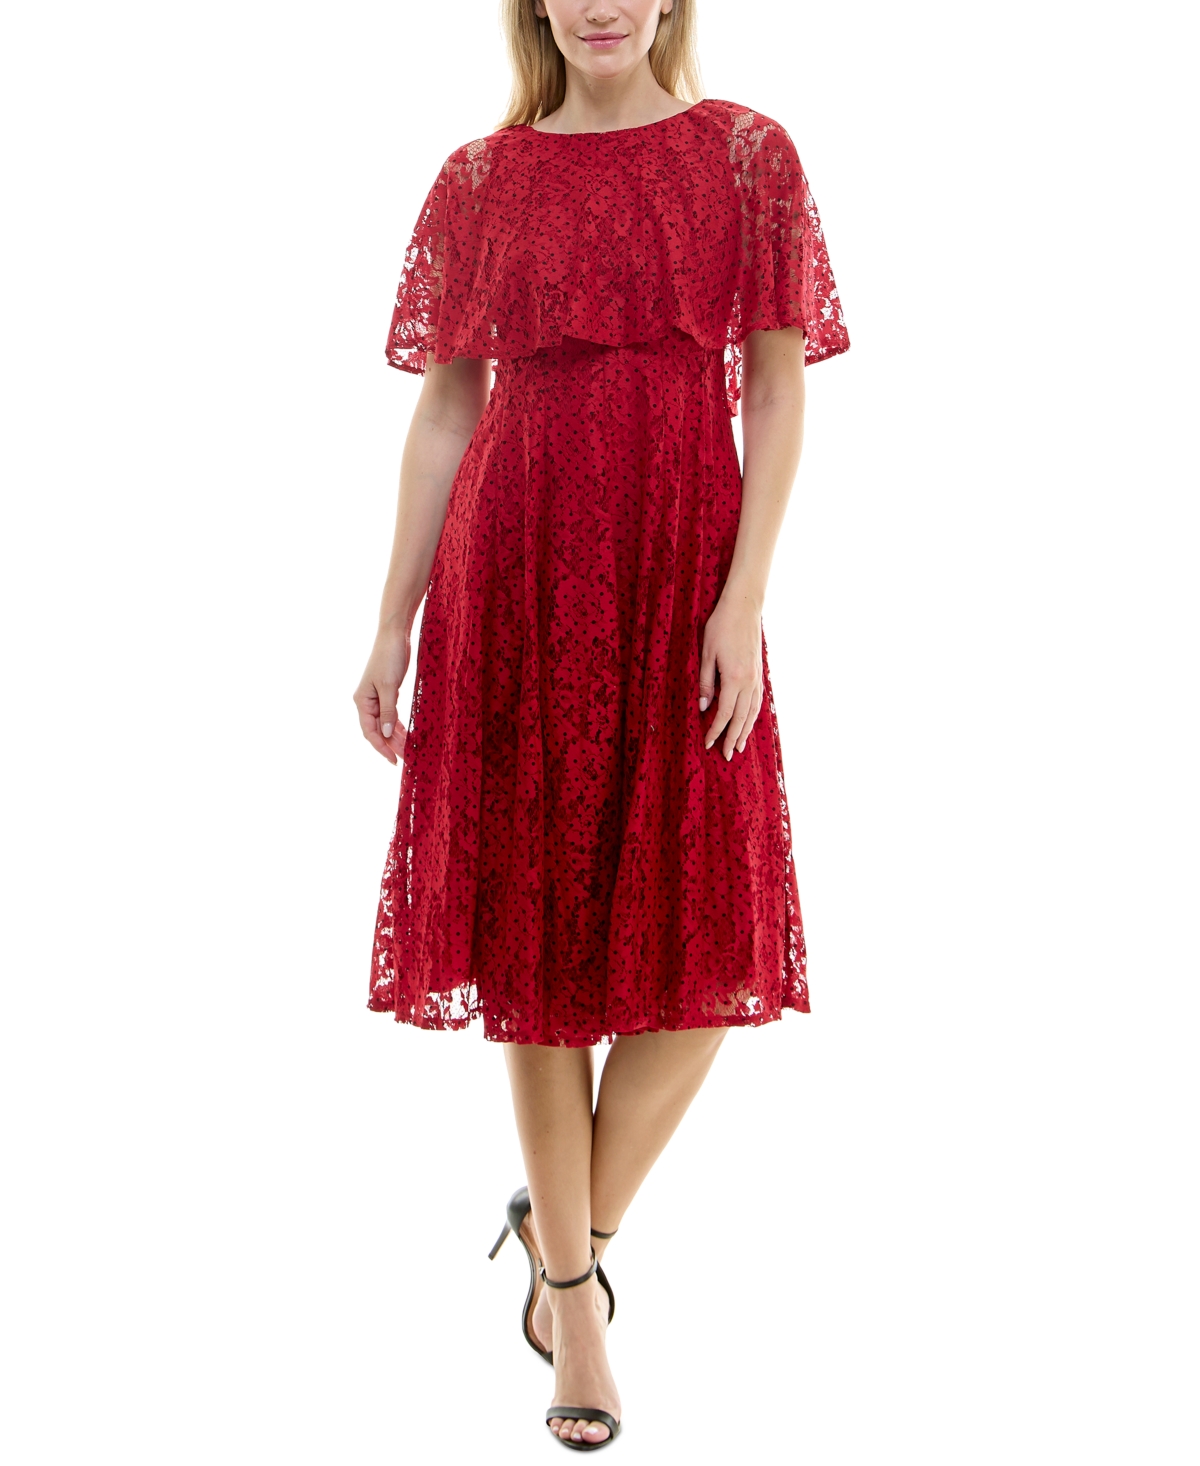 Women's Printed Lace Midi Cape Dress - Red/black